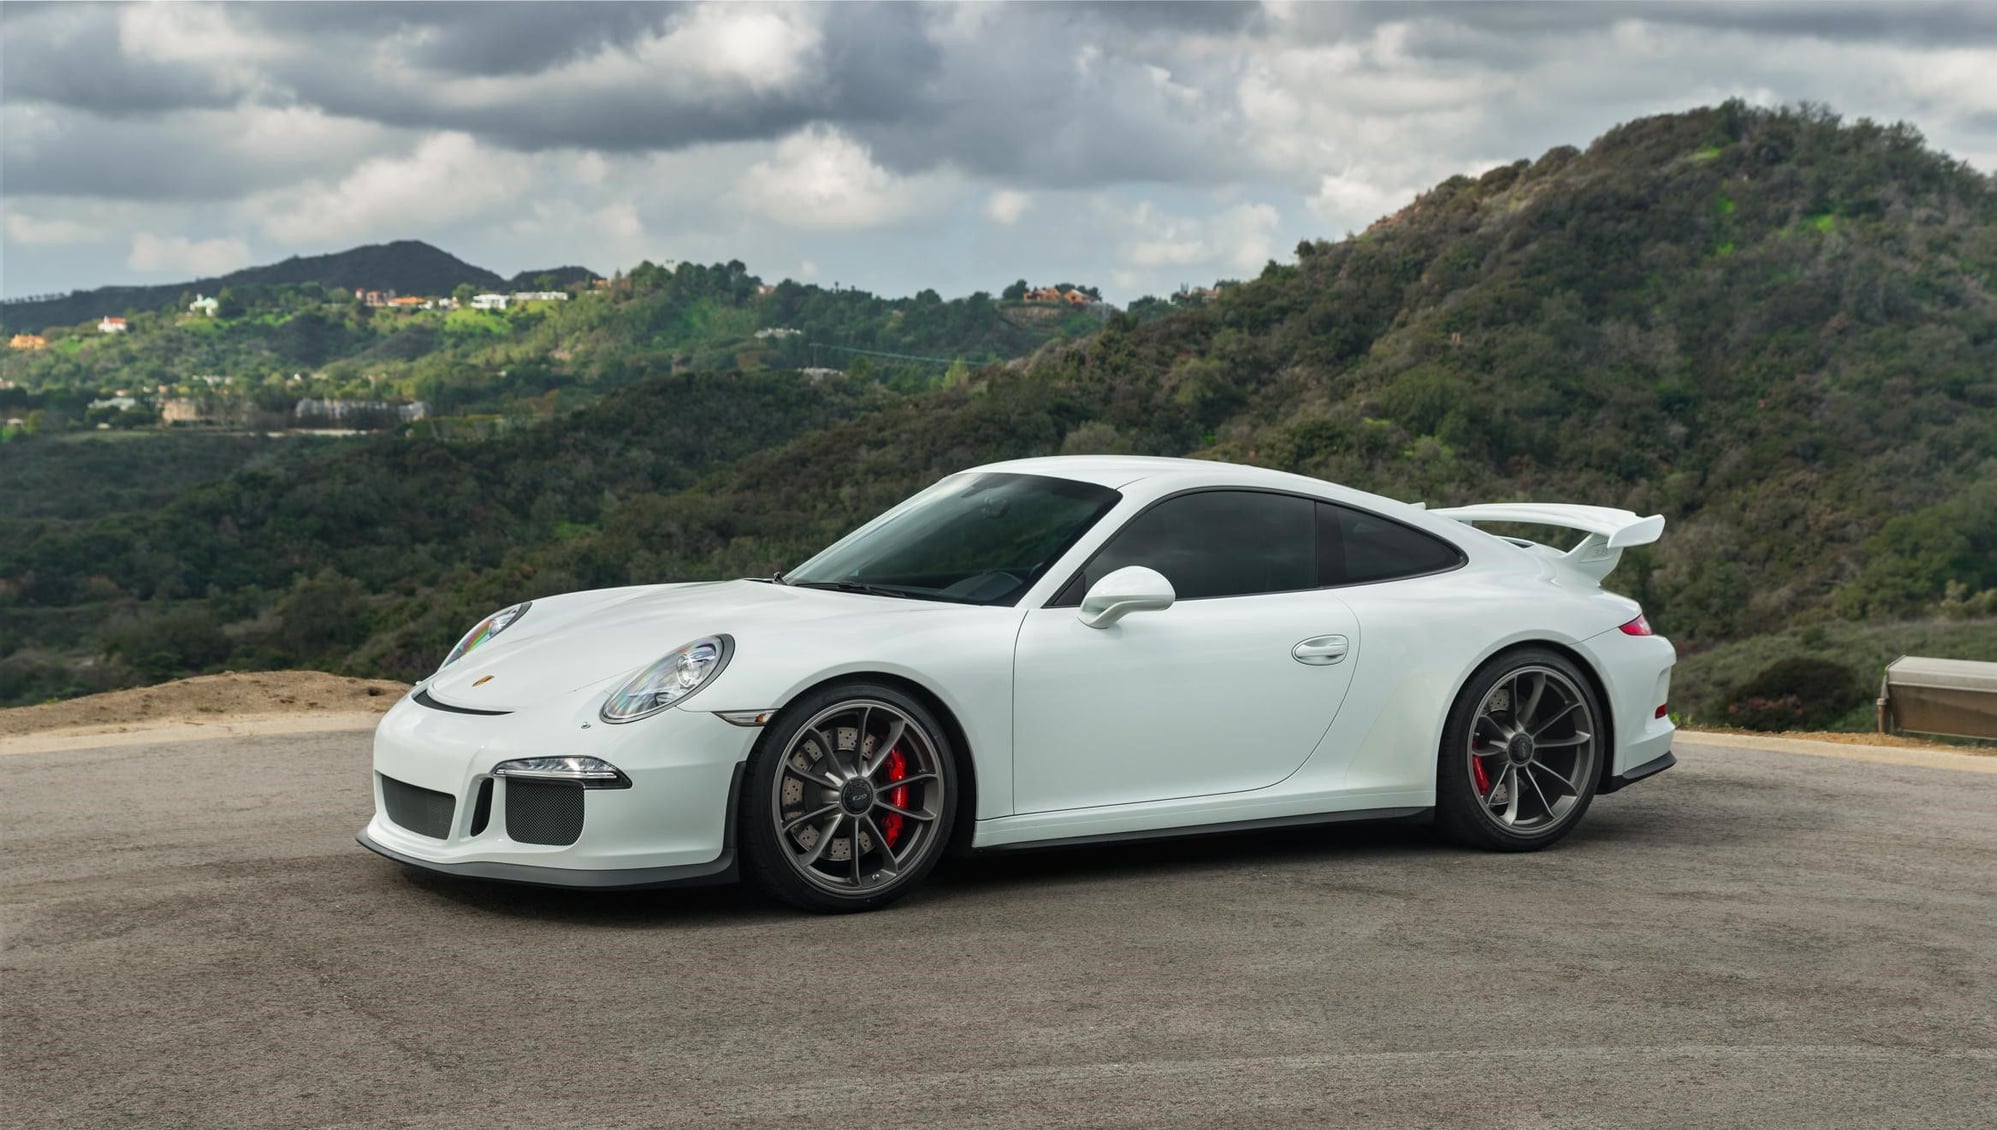 2014 - 2016 Porsche GT3 - WTB:  991.1 GT3 - Used - Scottsdale, AZ 85259, United States